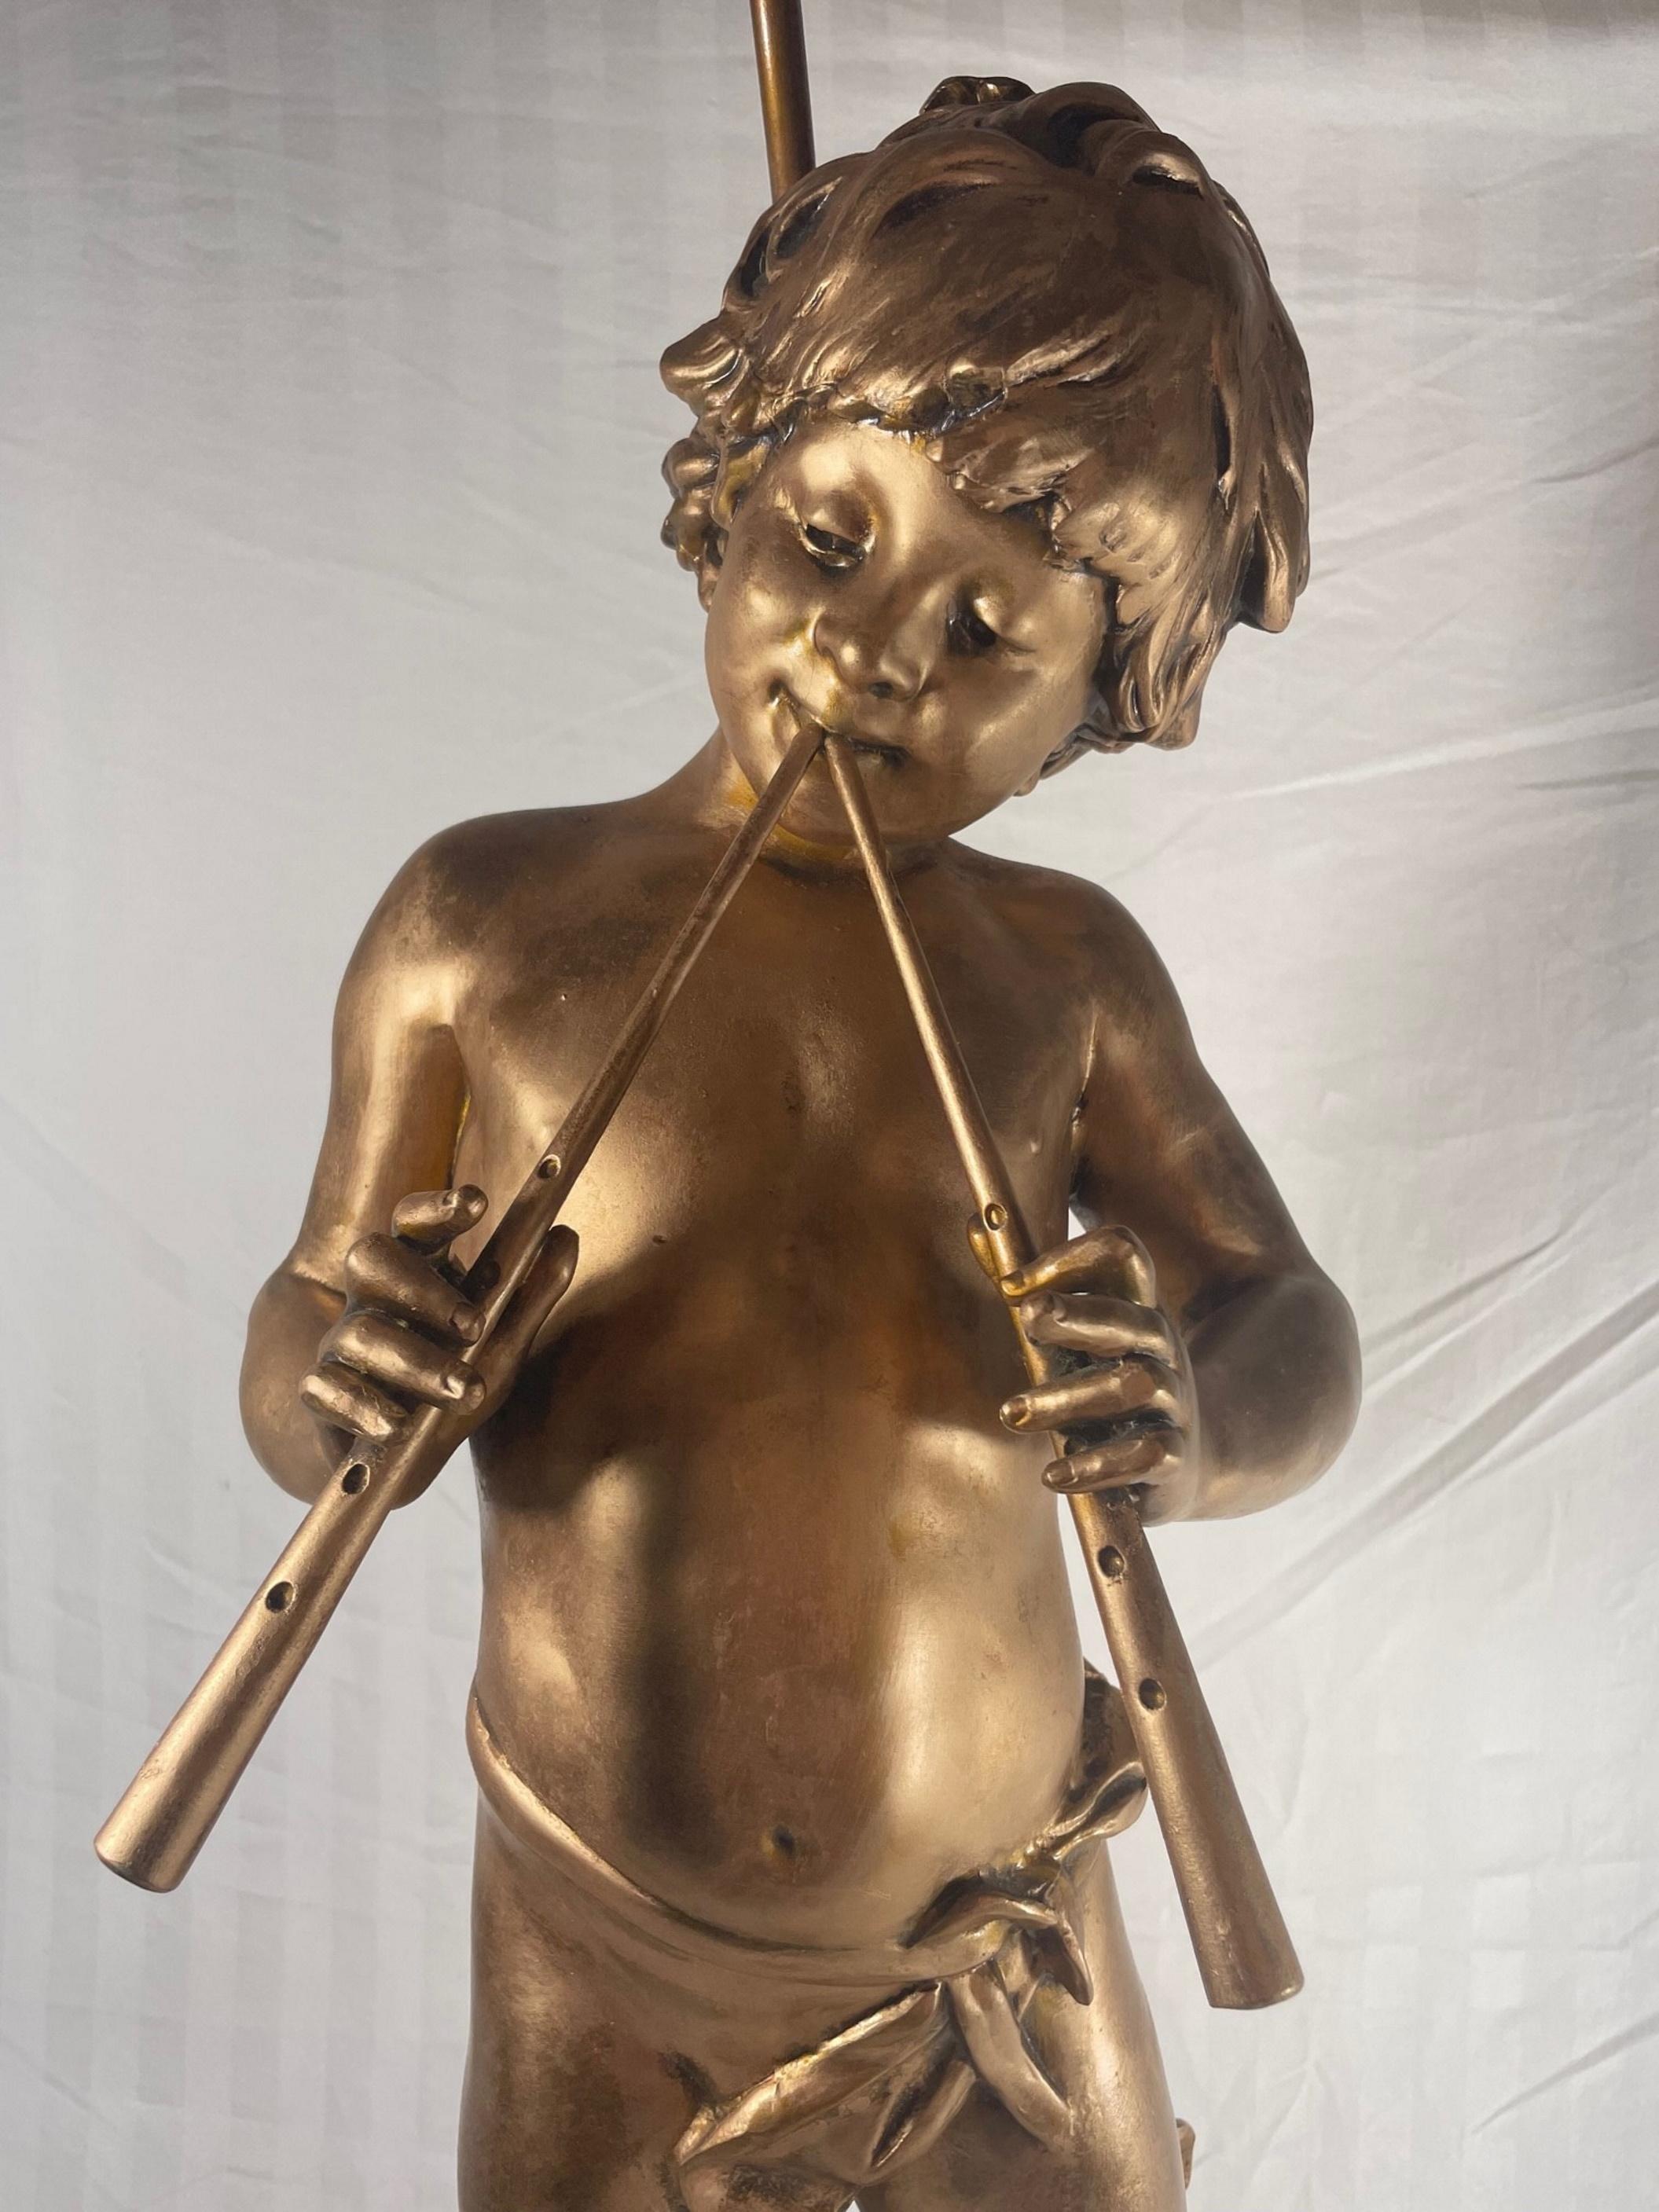 Belle Époque 19th Century French Gilt Bronzed Lamp Sculpture “Boy with Flute”, Signed Moreau. For Sale